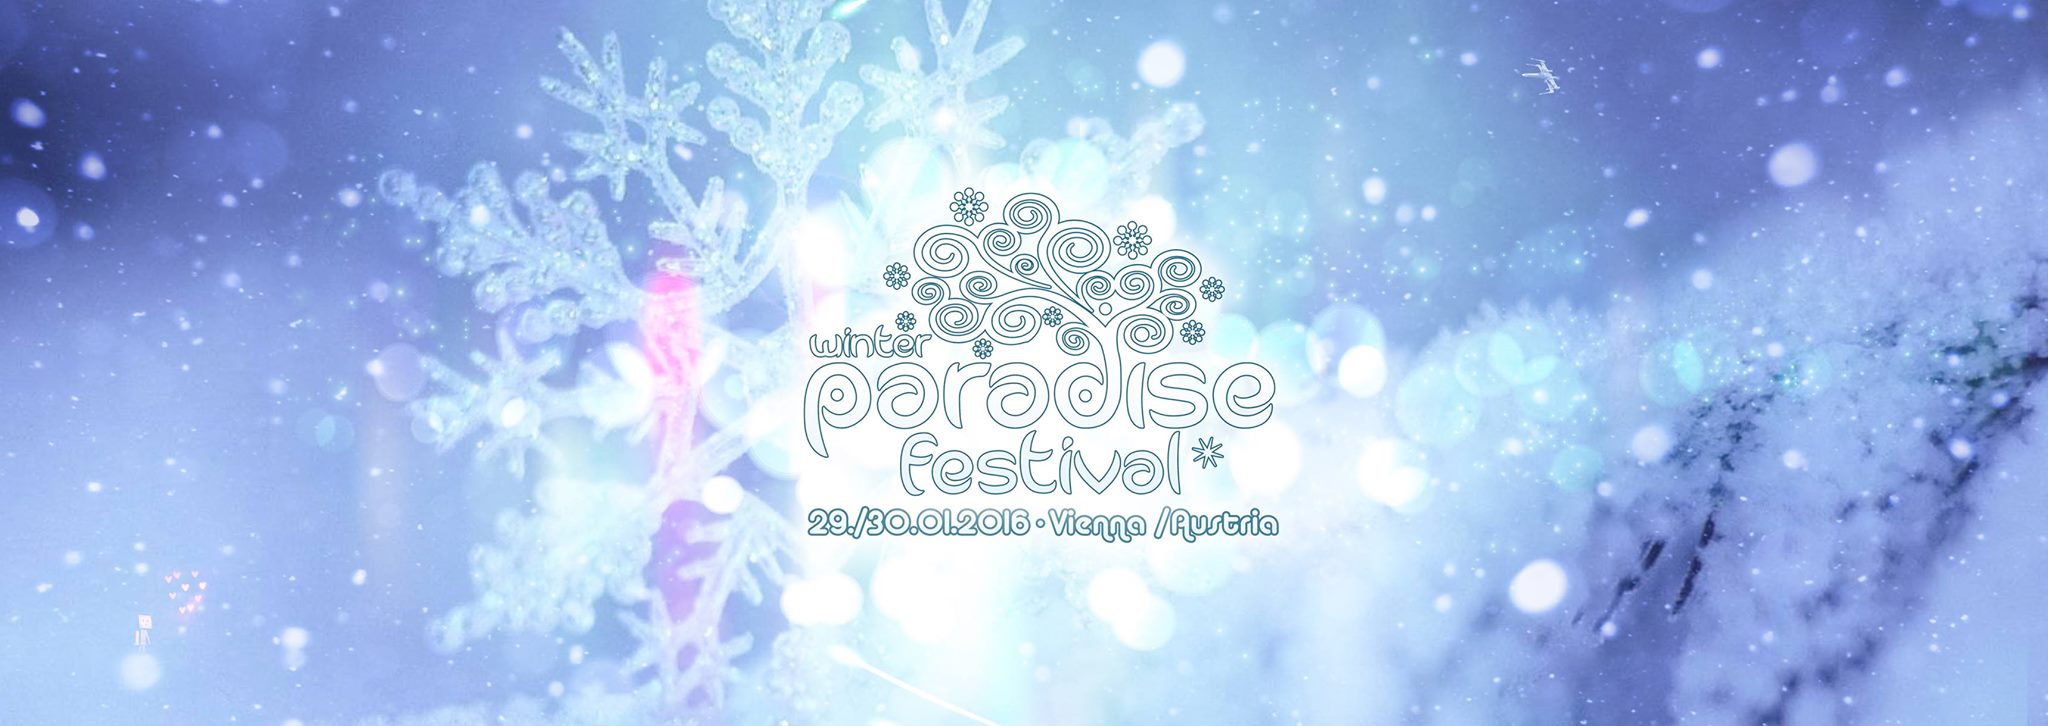 Paradise Winter Festival 2016